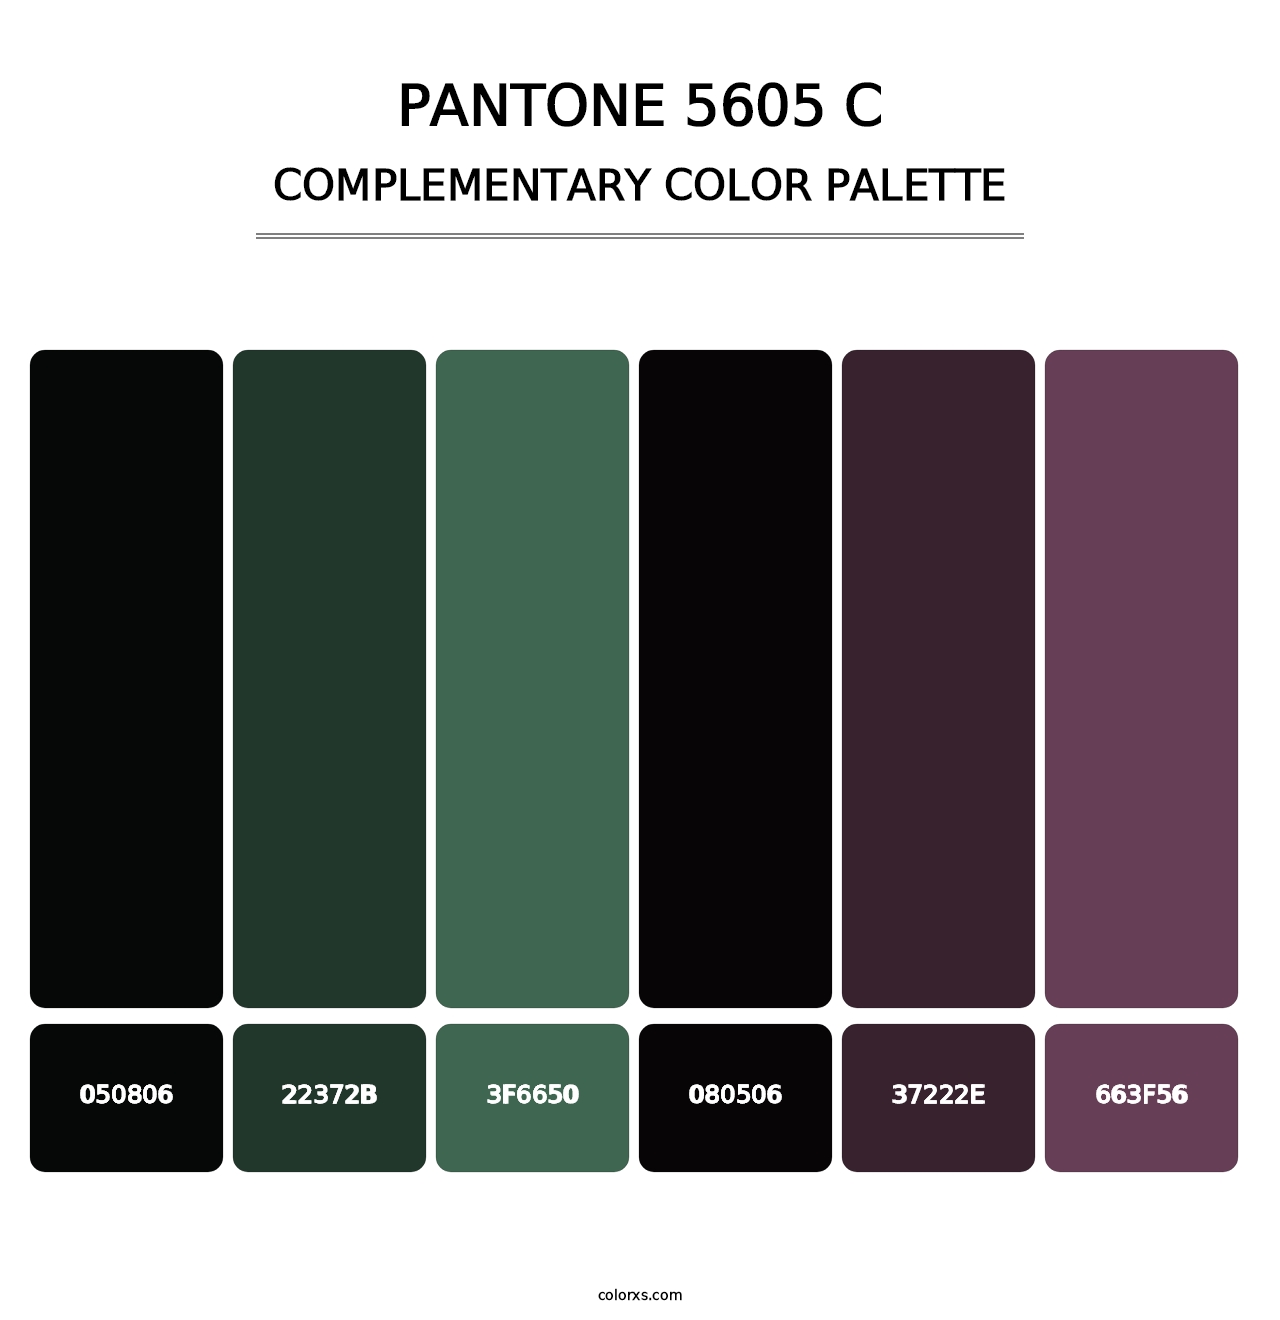 PANTONE 5605 C - Complementary Color Palette